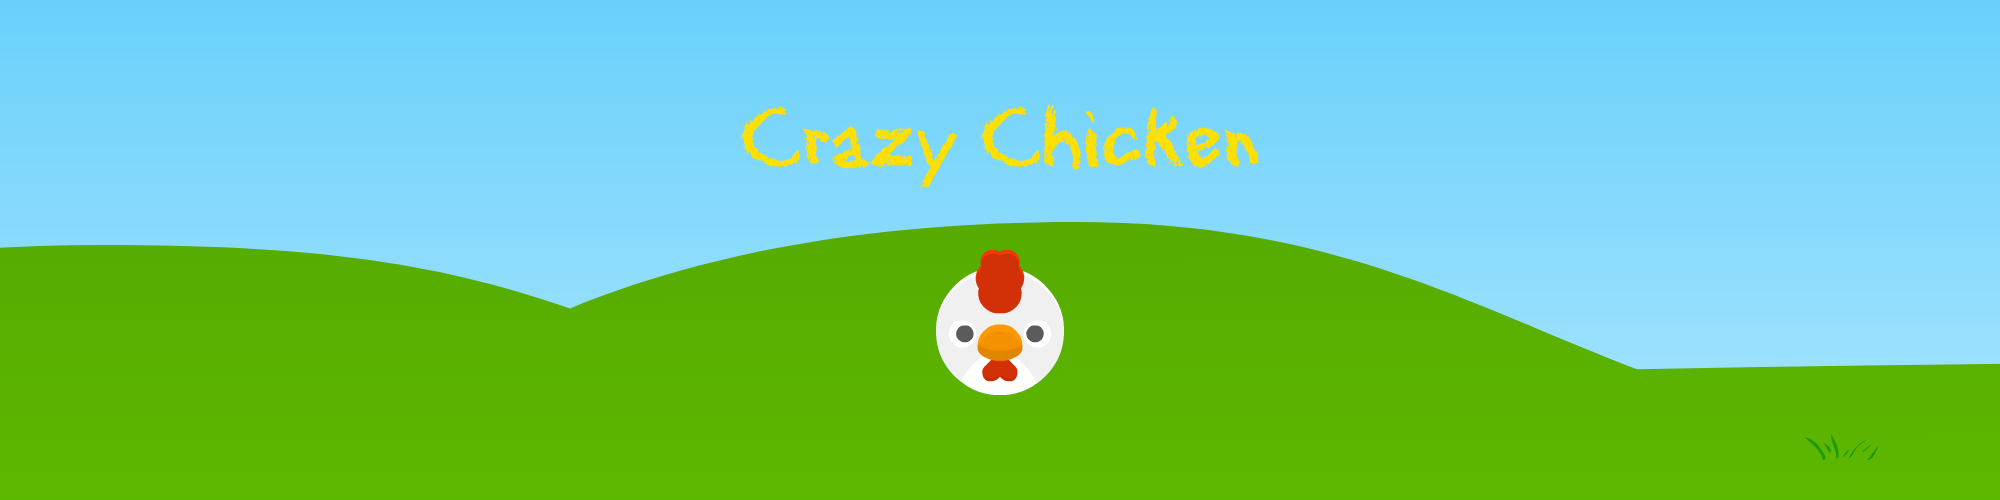 Crazy Chicken - Game Dev Challenge Fall 2018 Frogger 